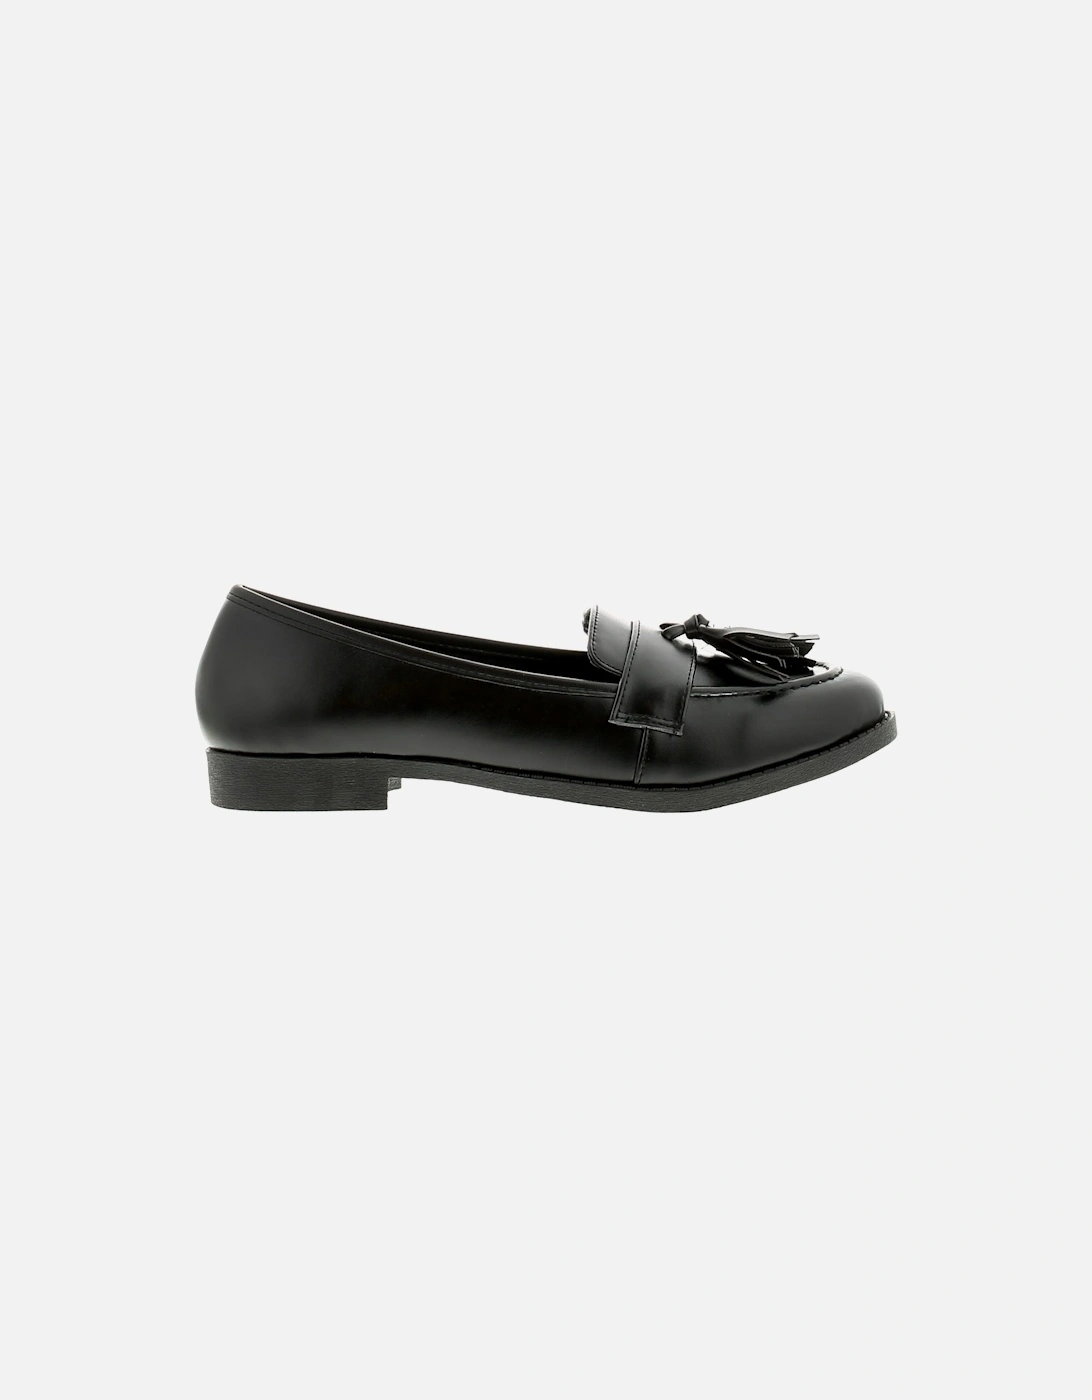 Womens Shoes teasle Slip On black UK Size